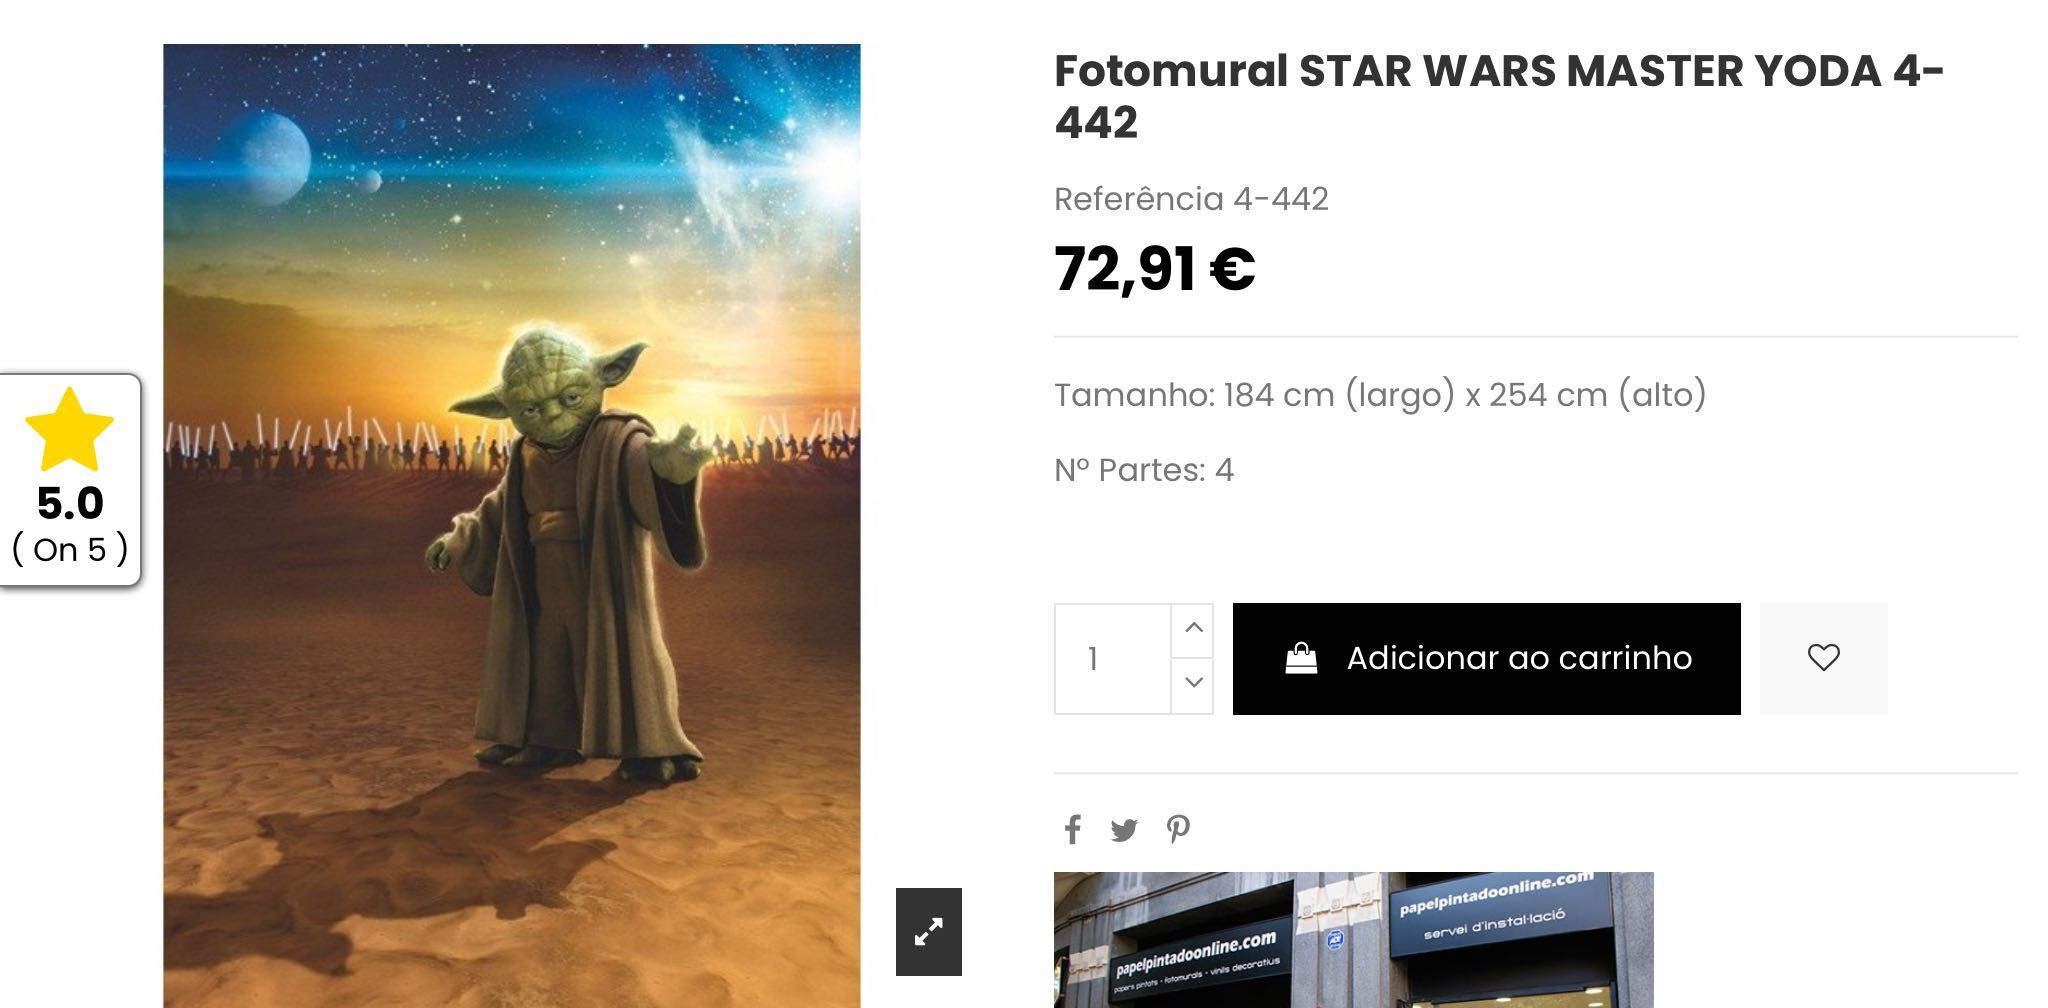 Fotomural Star Wars by KOMAR 4-442 Meste Yoda